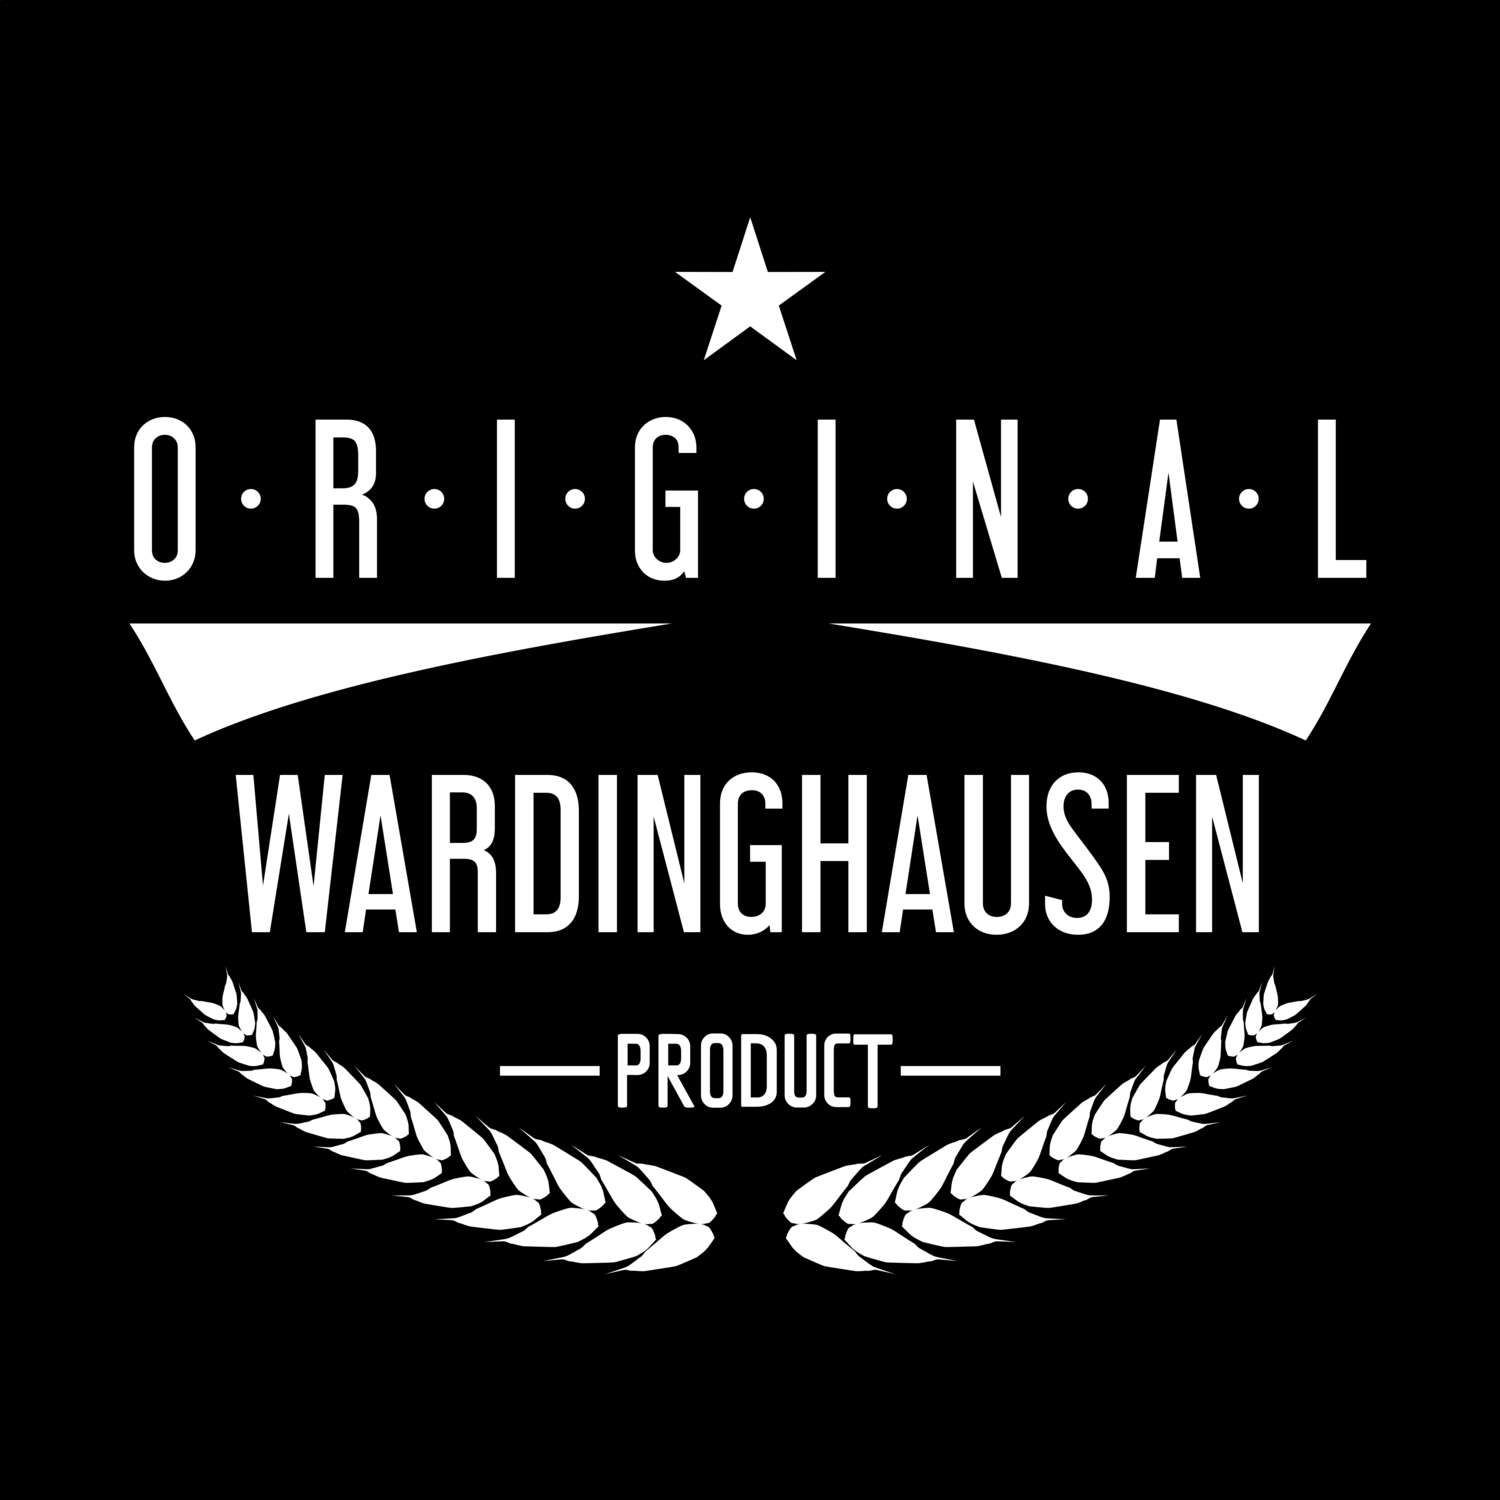 Wardinghausen T-Shirt »Original Product«